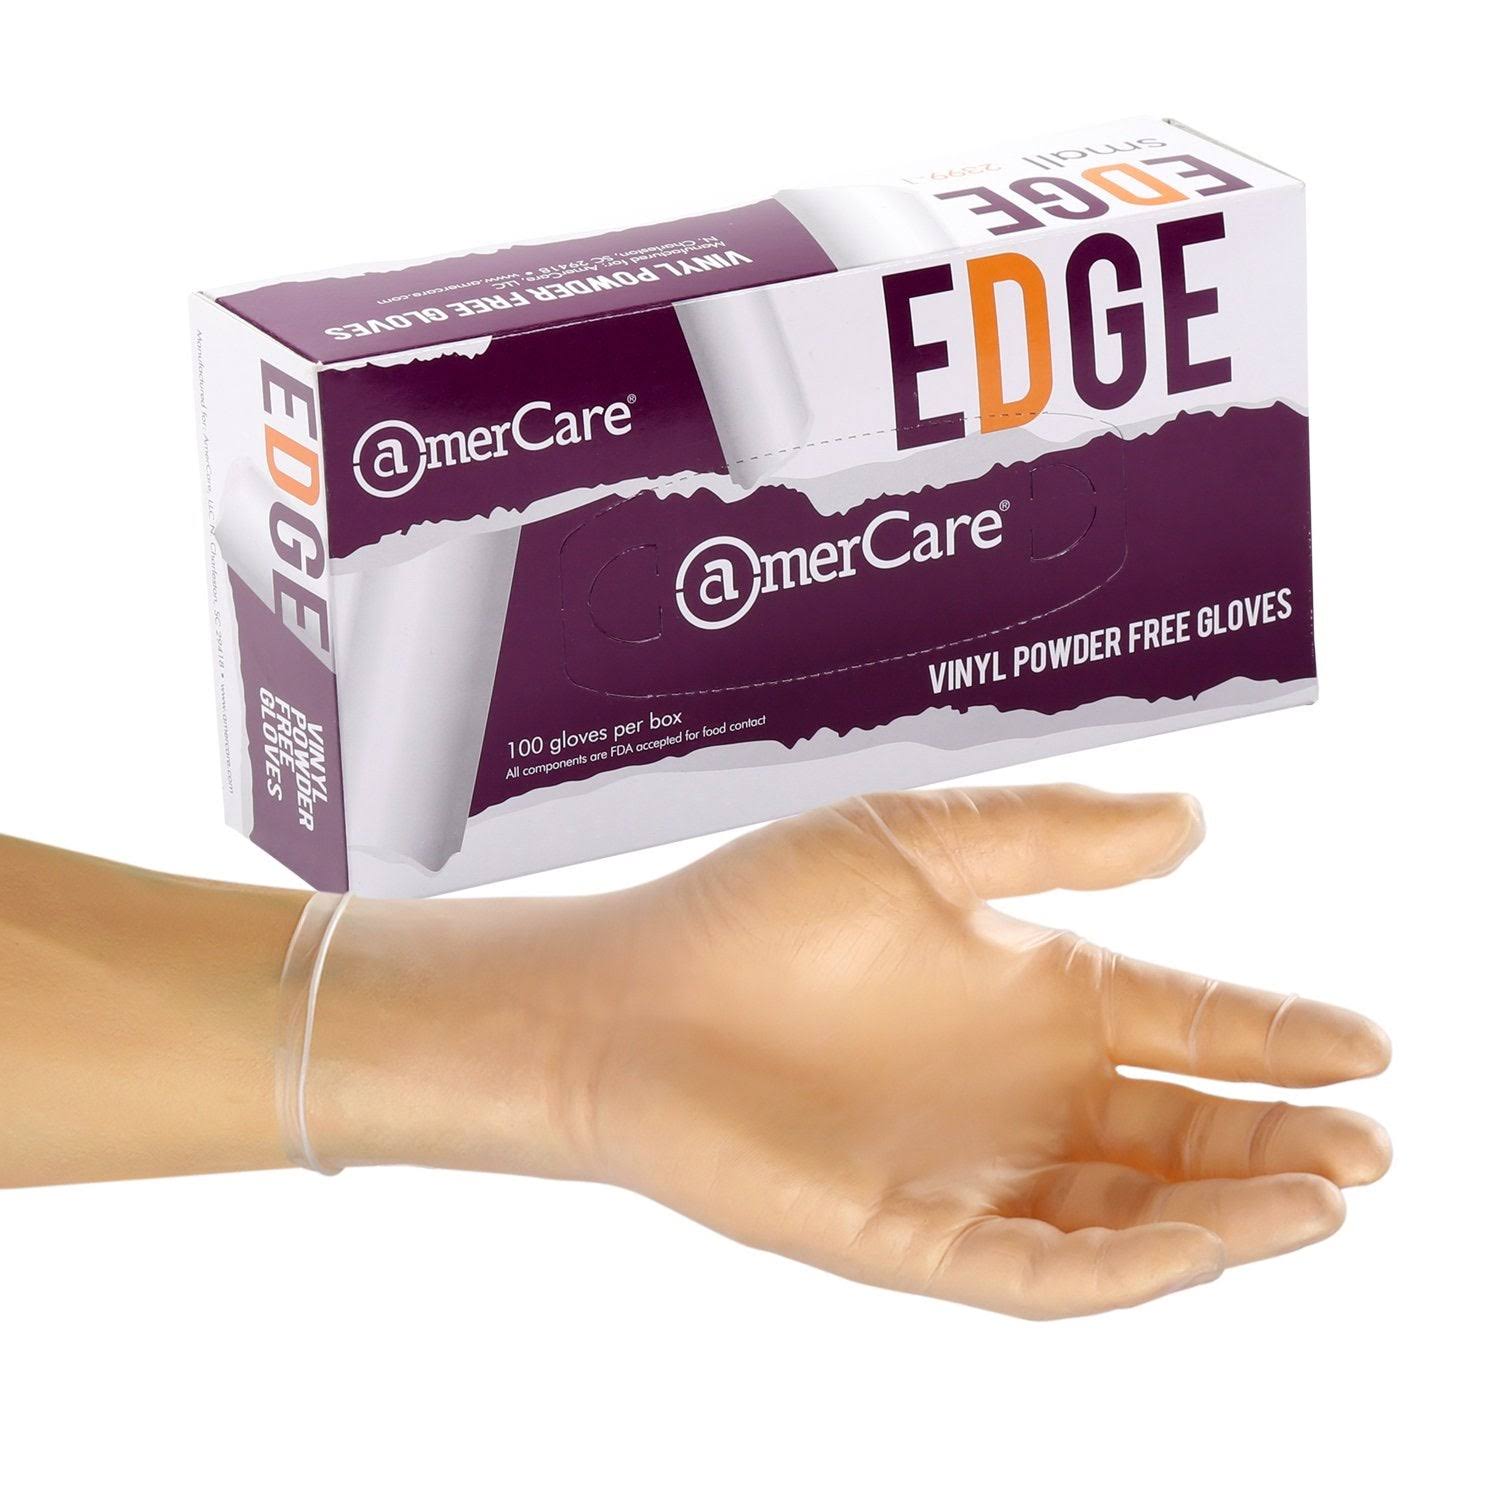 Amercare Edge Powder Free Gloves, Vinyl, Medium, Box of 100